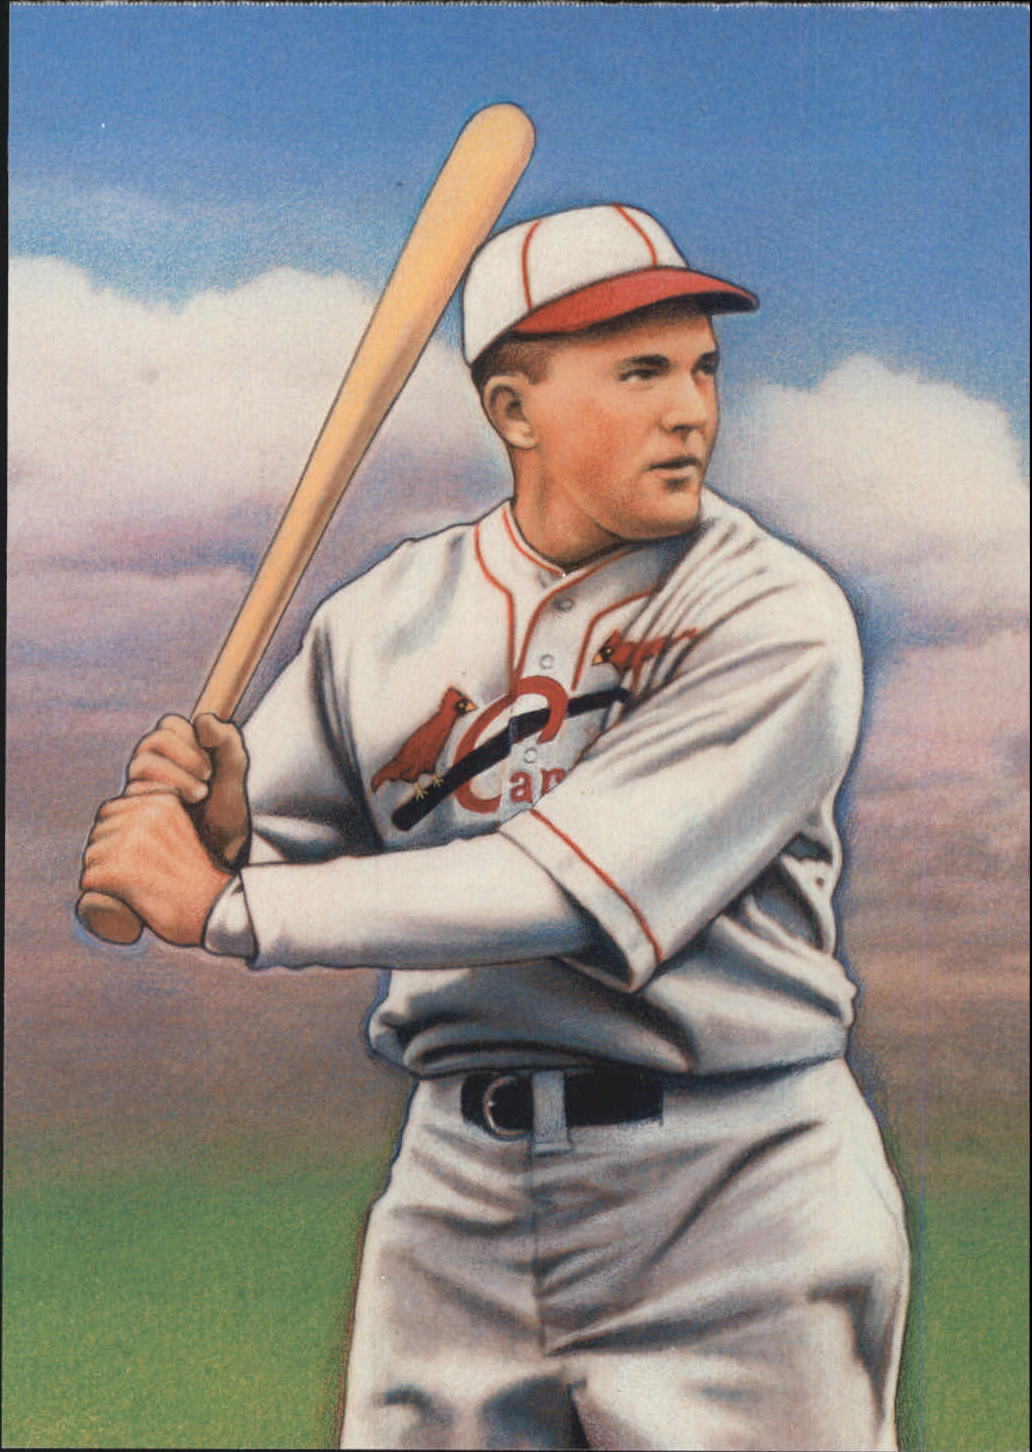 2000 USPS Legends of Baseball Postcards #10 Rogers Hornsby